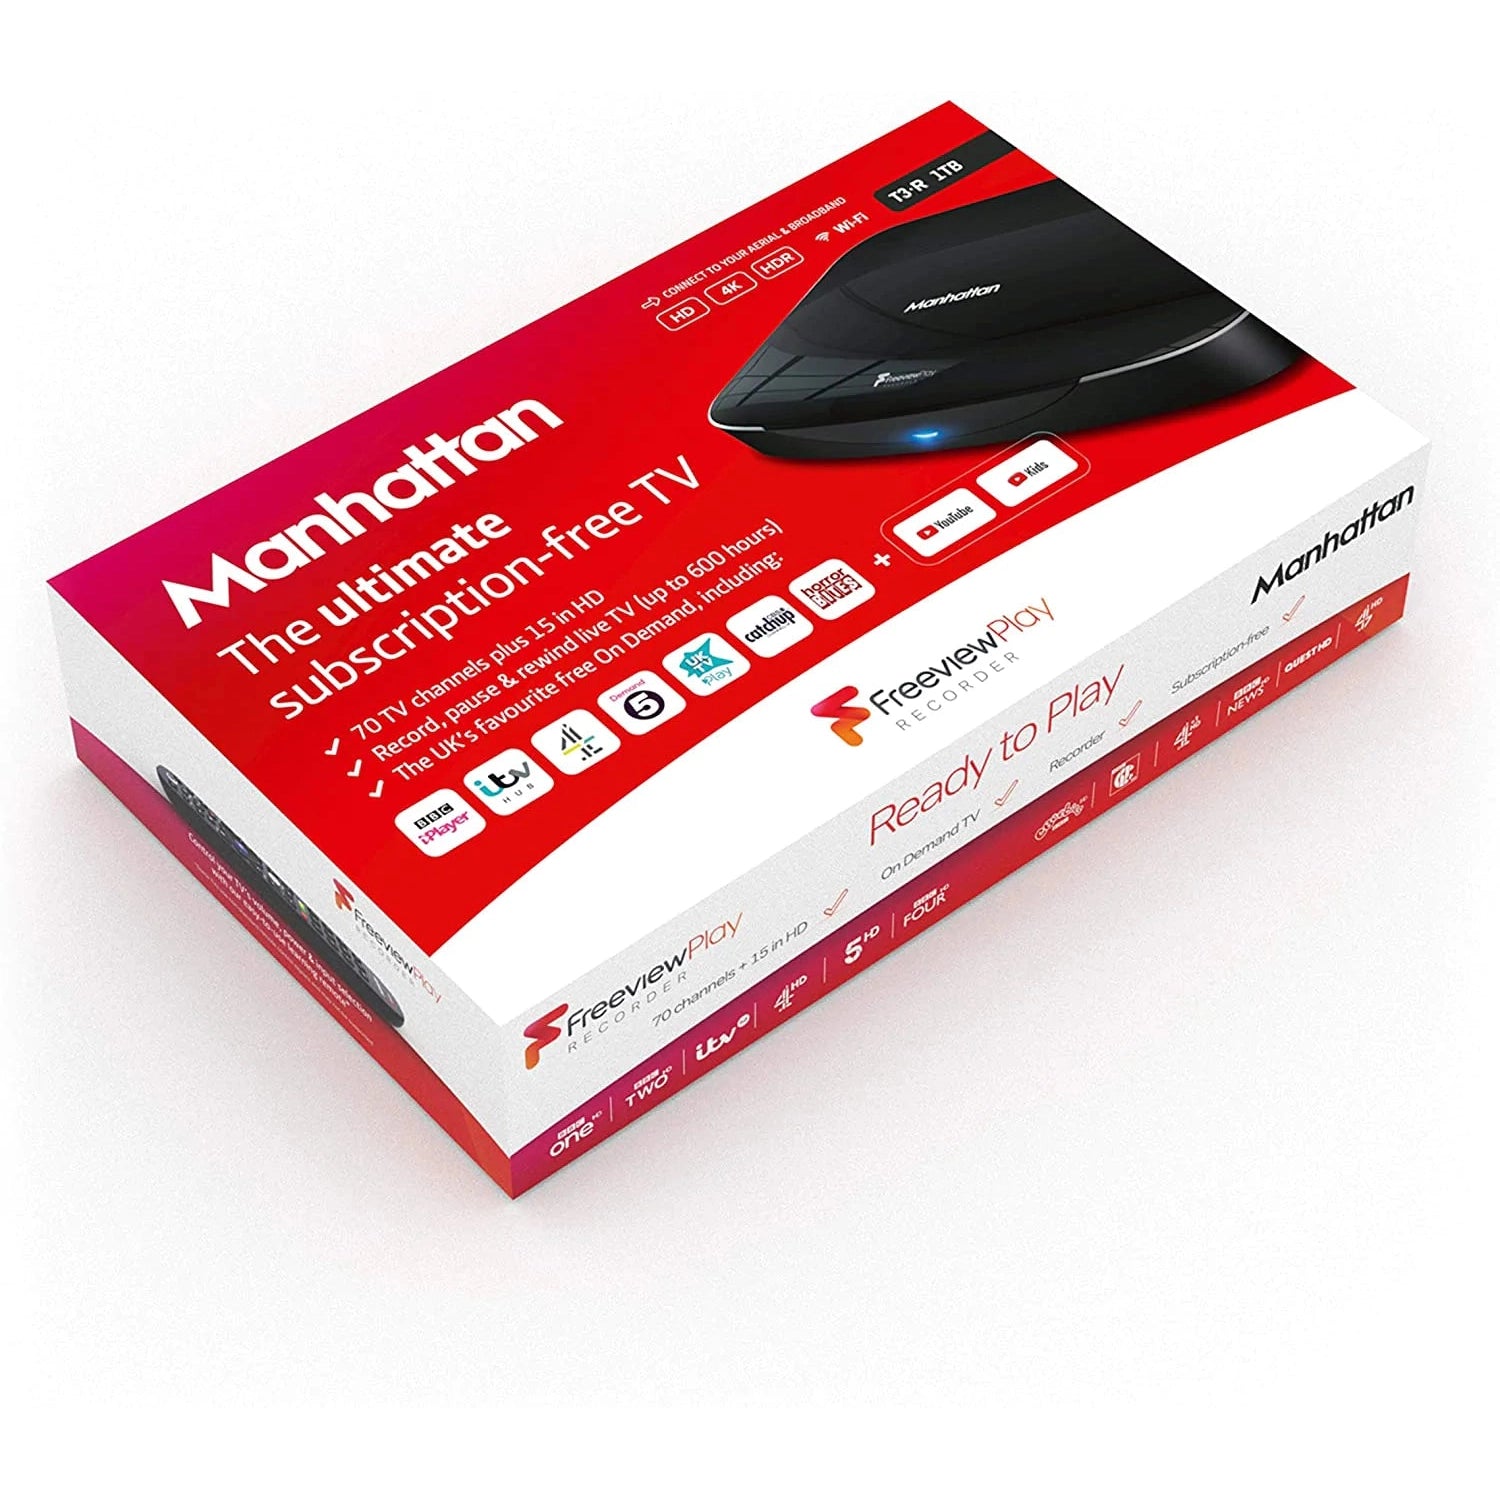 Manhattan T3-R Smart Freeview Play TV Recorder, 500GB - Black - Refurbished Pristine